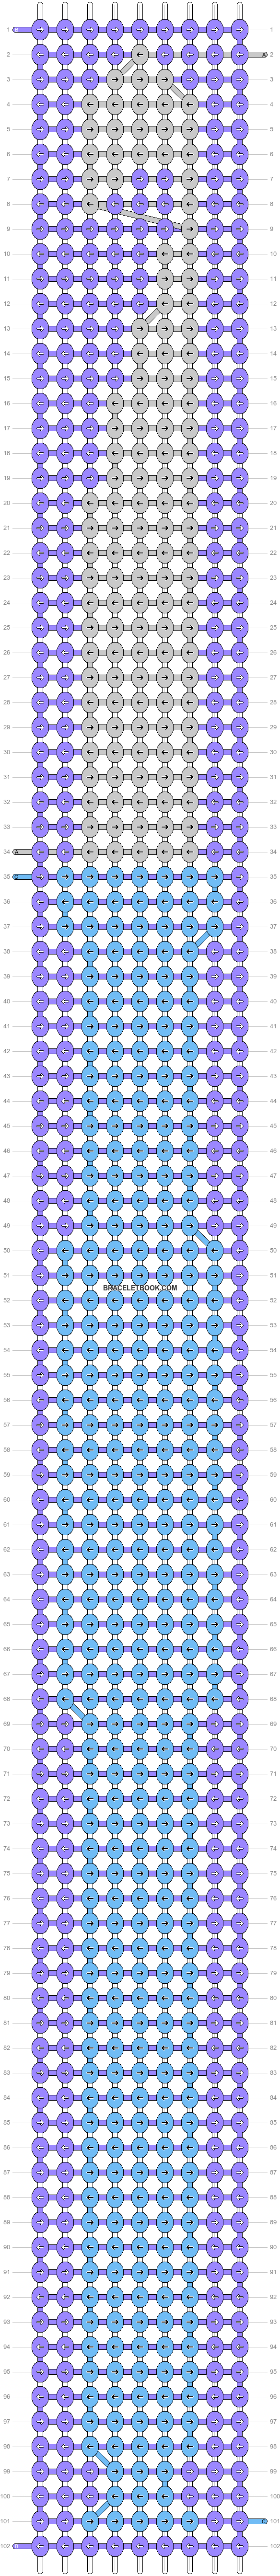 Alpha pattern #52753 variation #85905 pattern